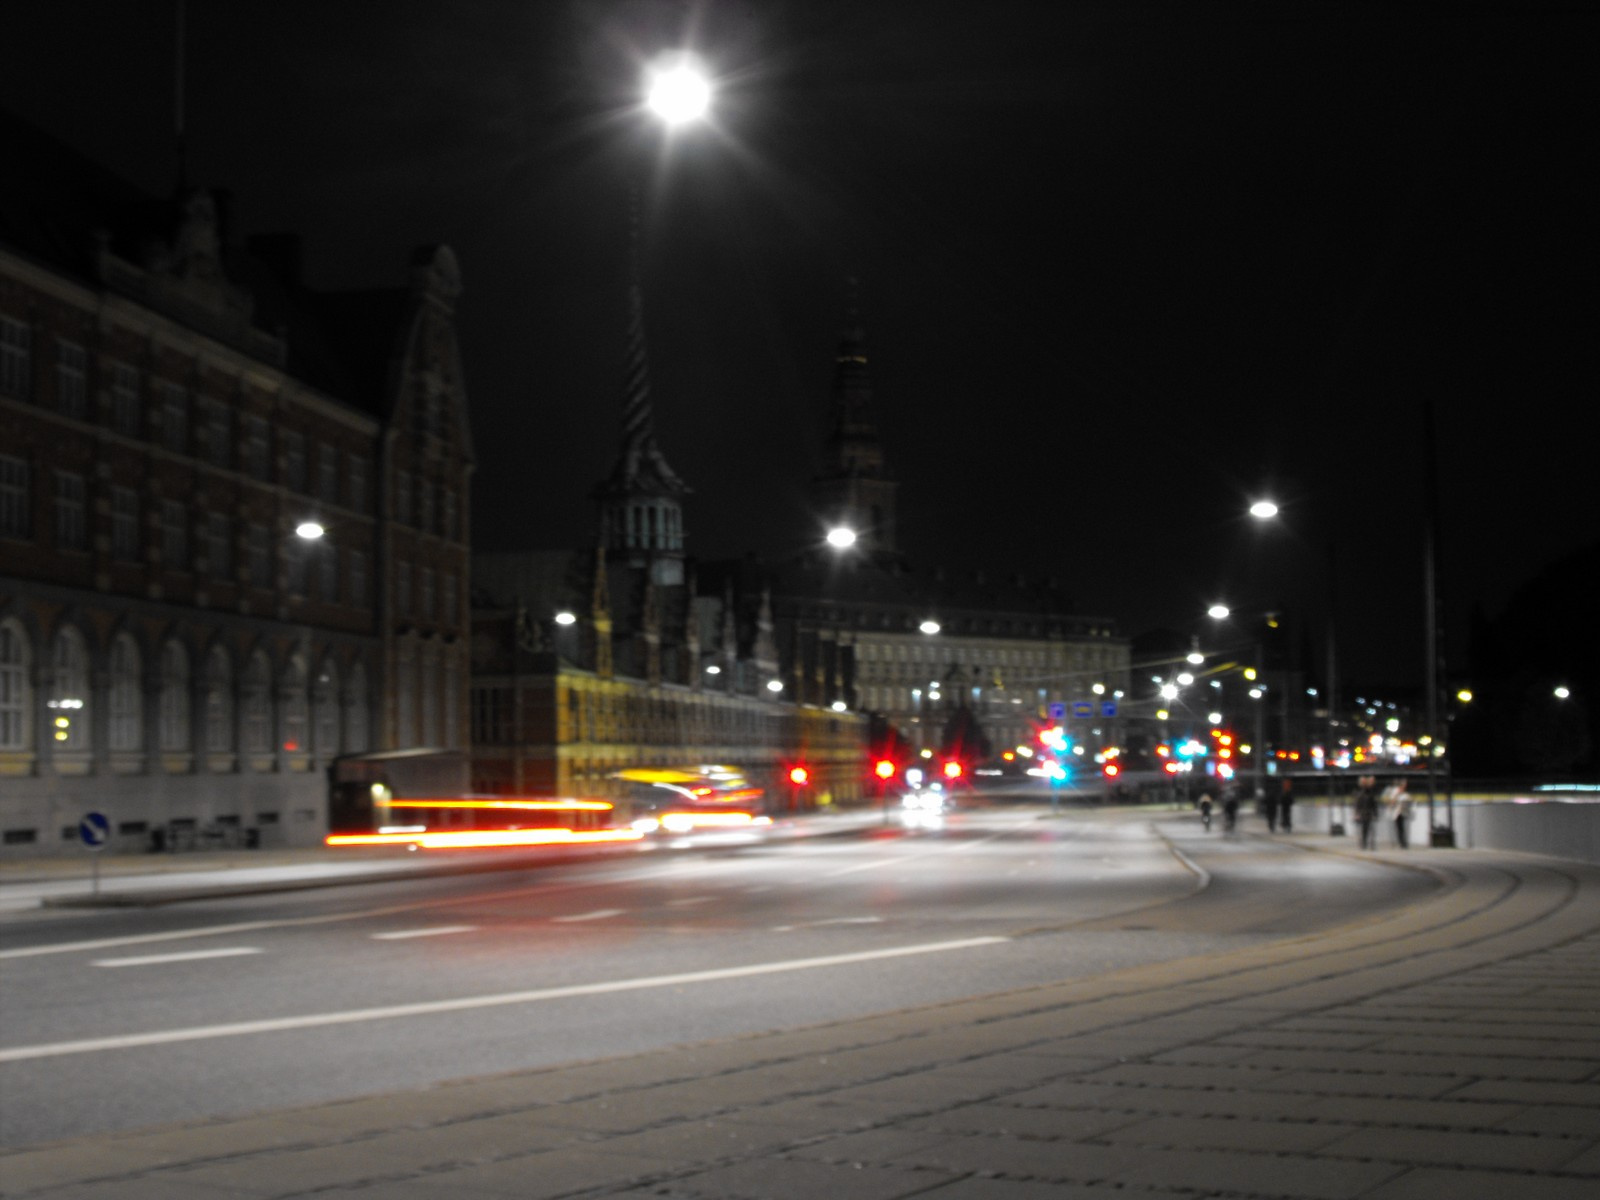 Koppenhága belváros este København i natten Børsen i København